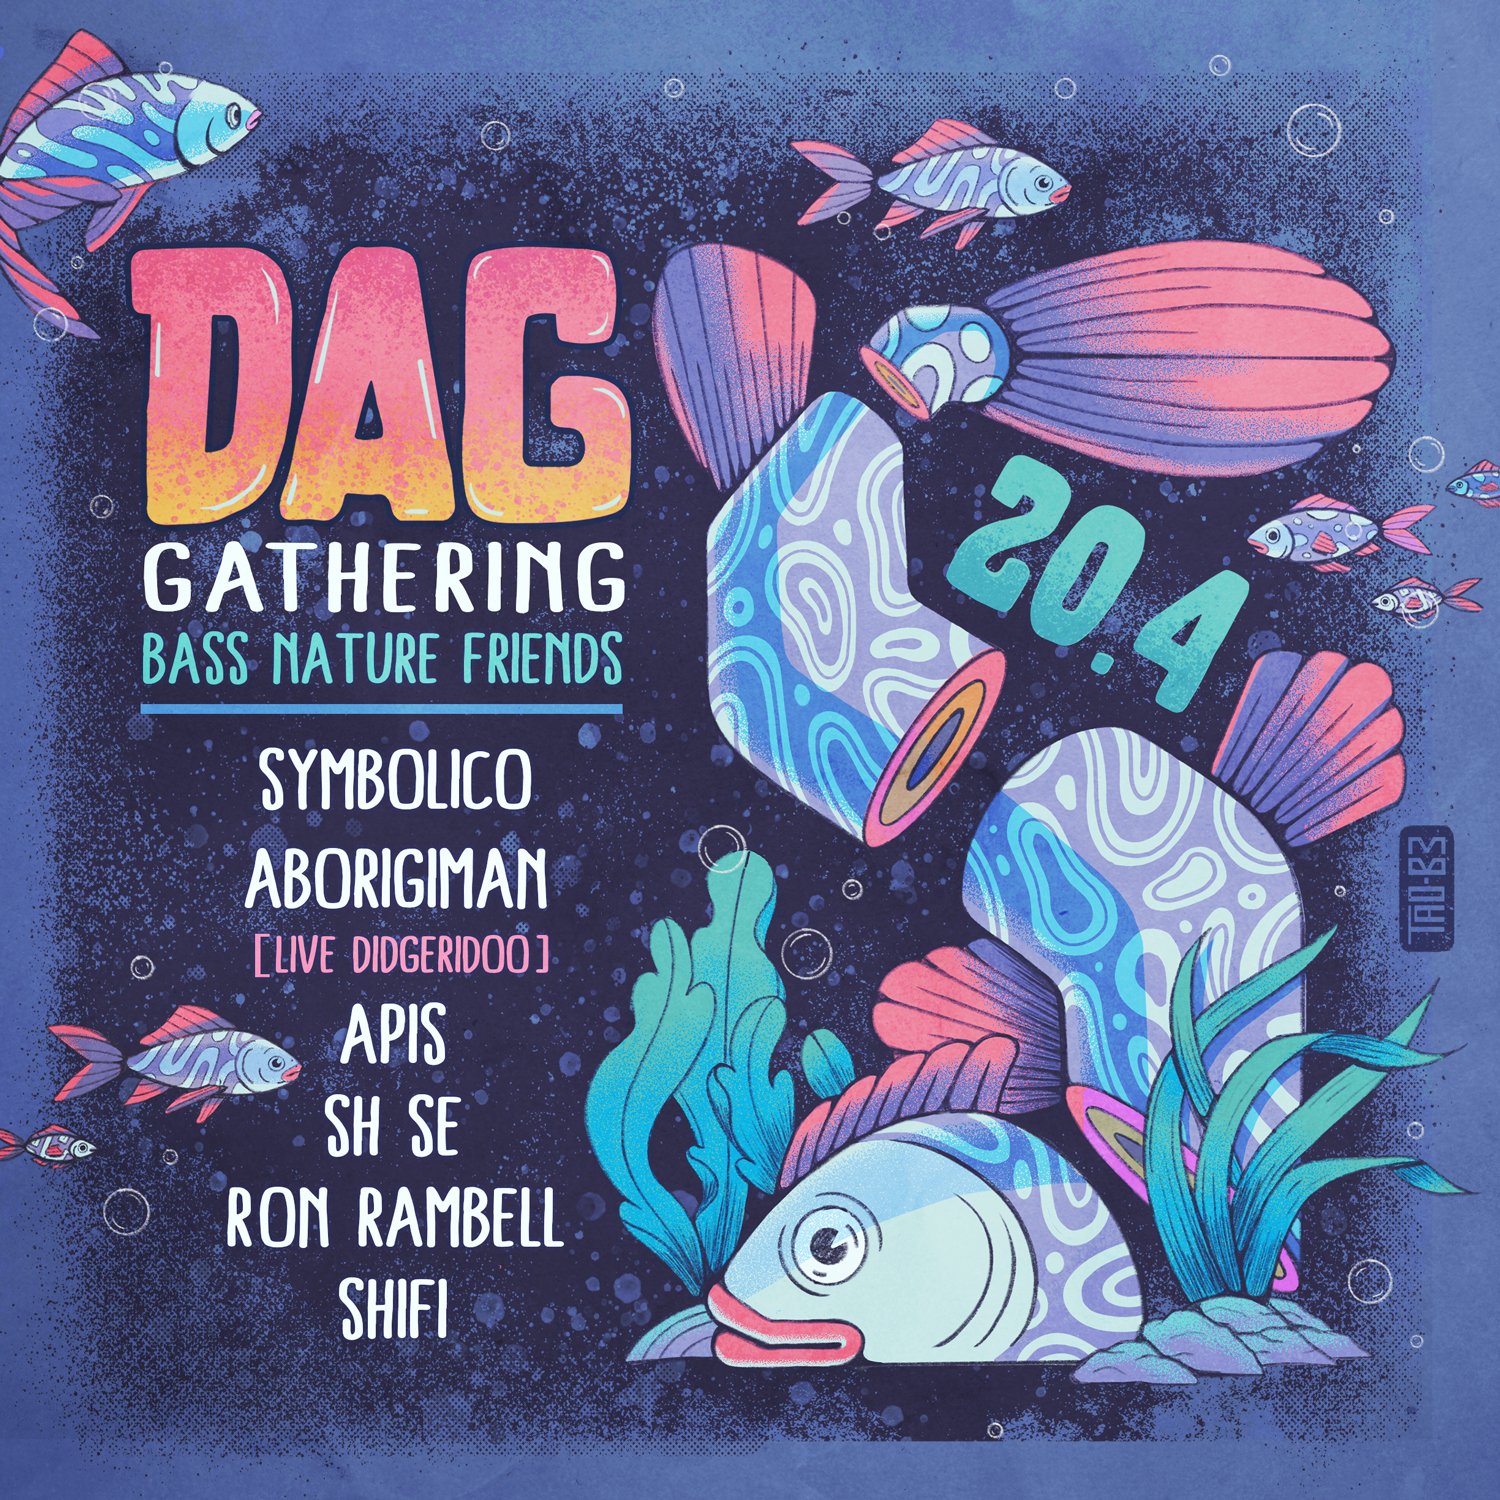 Dag-Gathering_1500x1500_1-1_lineup.jpg